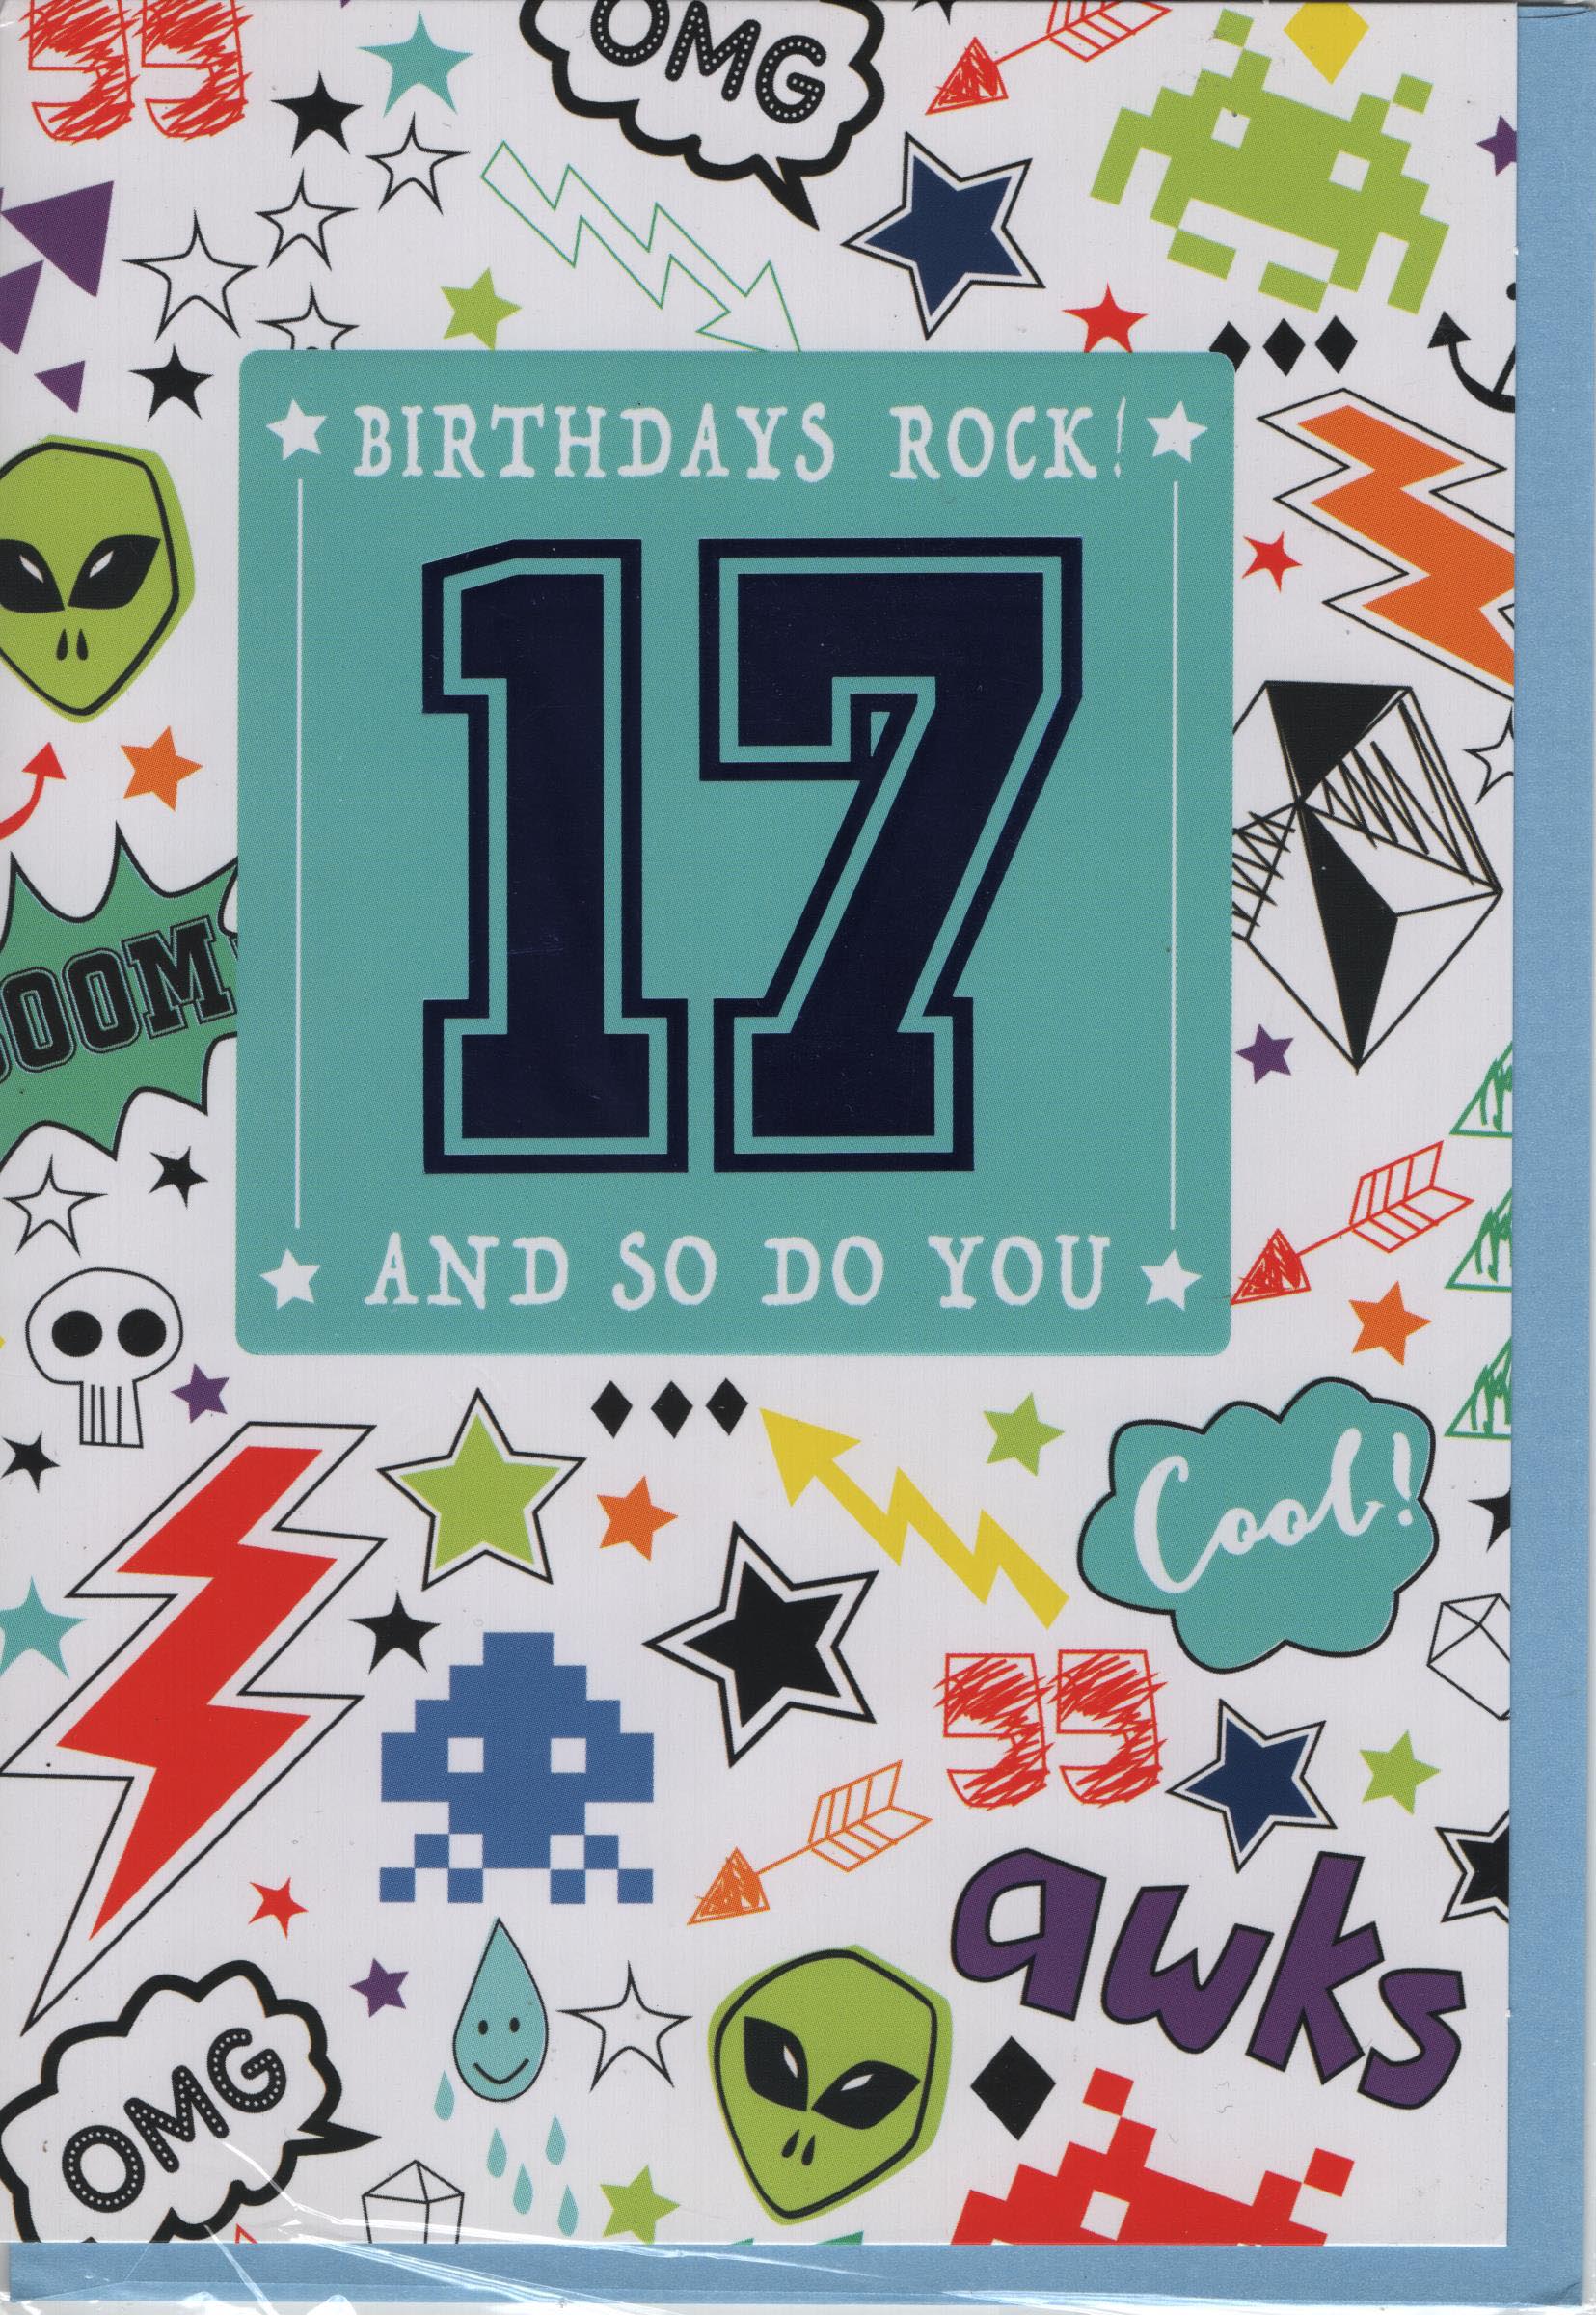 Birthdays Rock 17 and So Do You